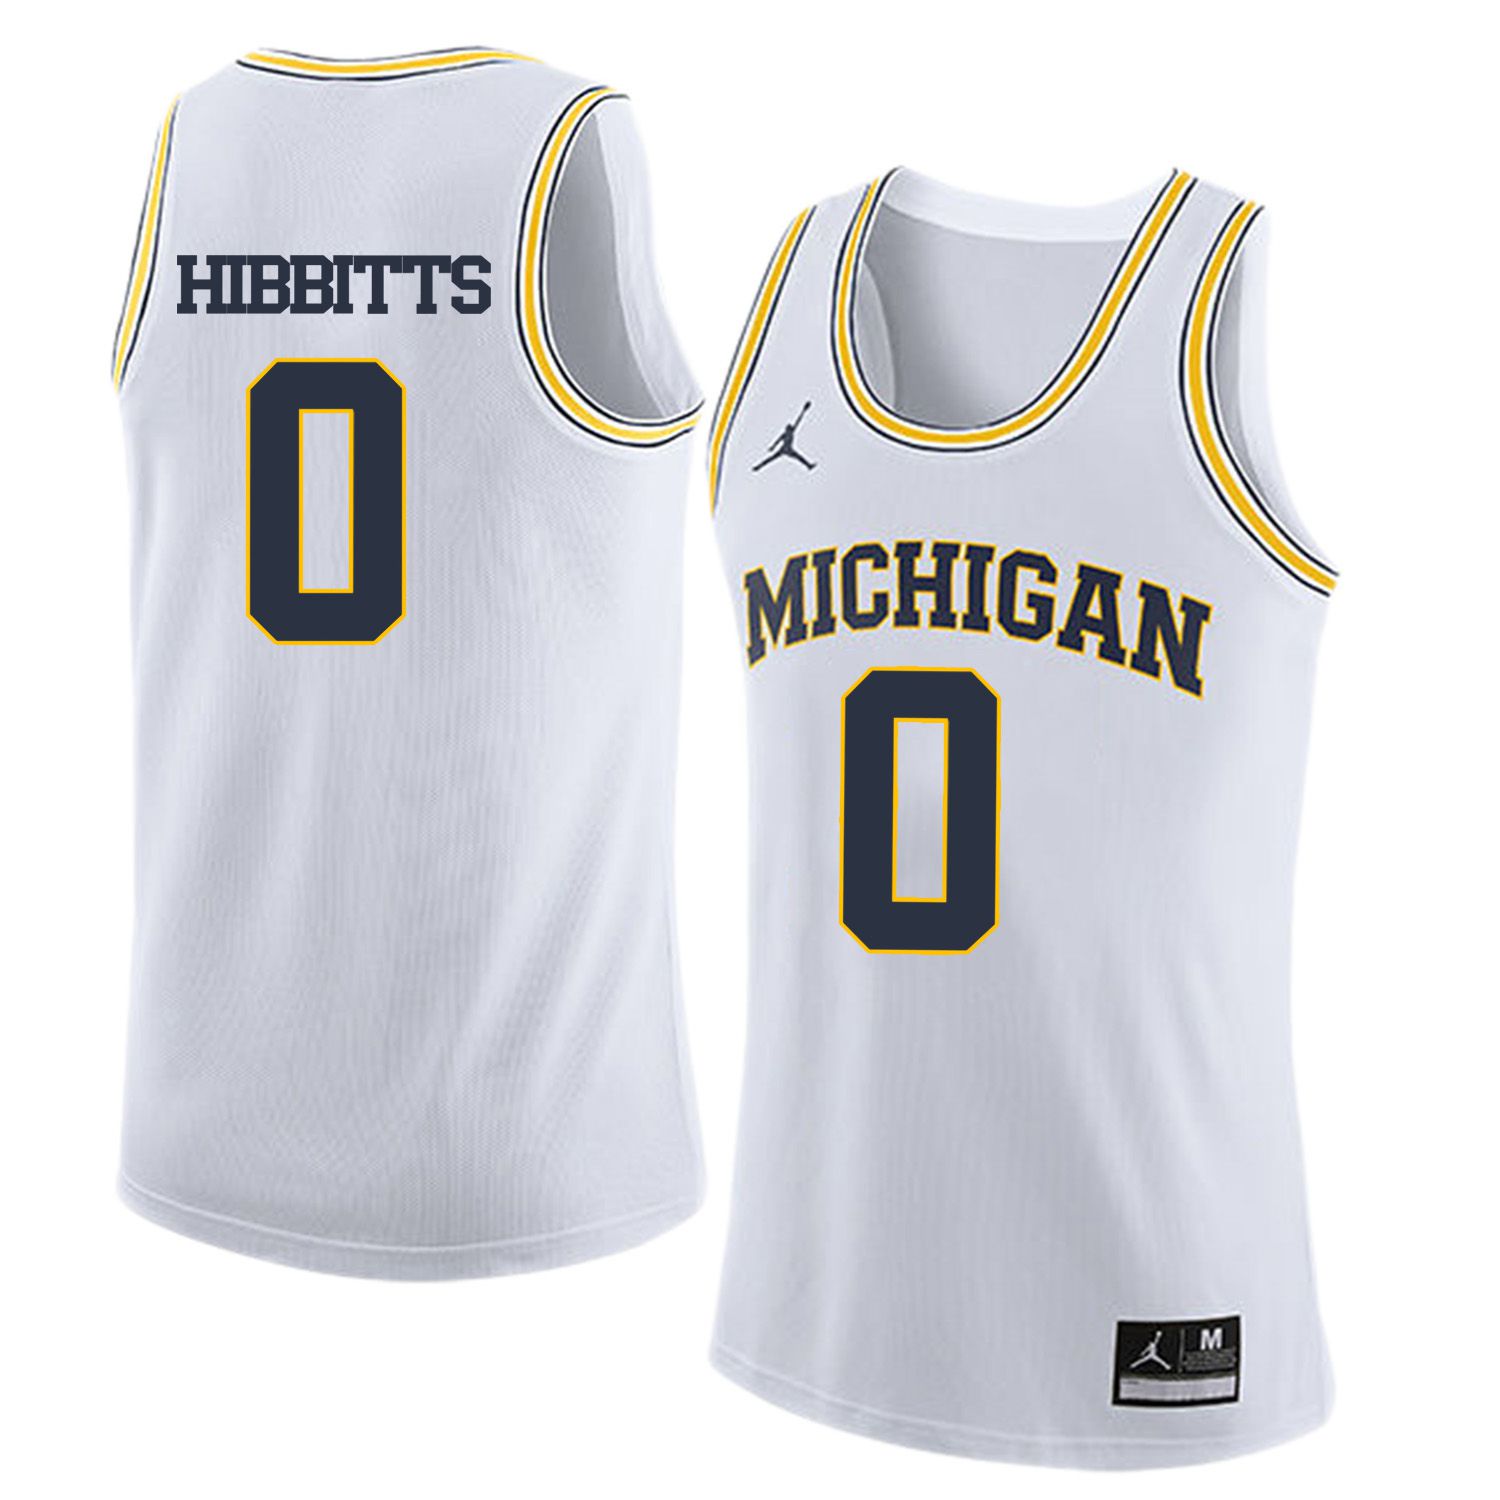 Men Jordan University of Michigan Basketball White 0 Hibbitts Customized NCAA Jerseys